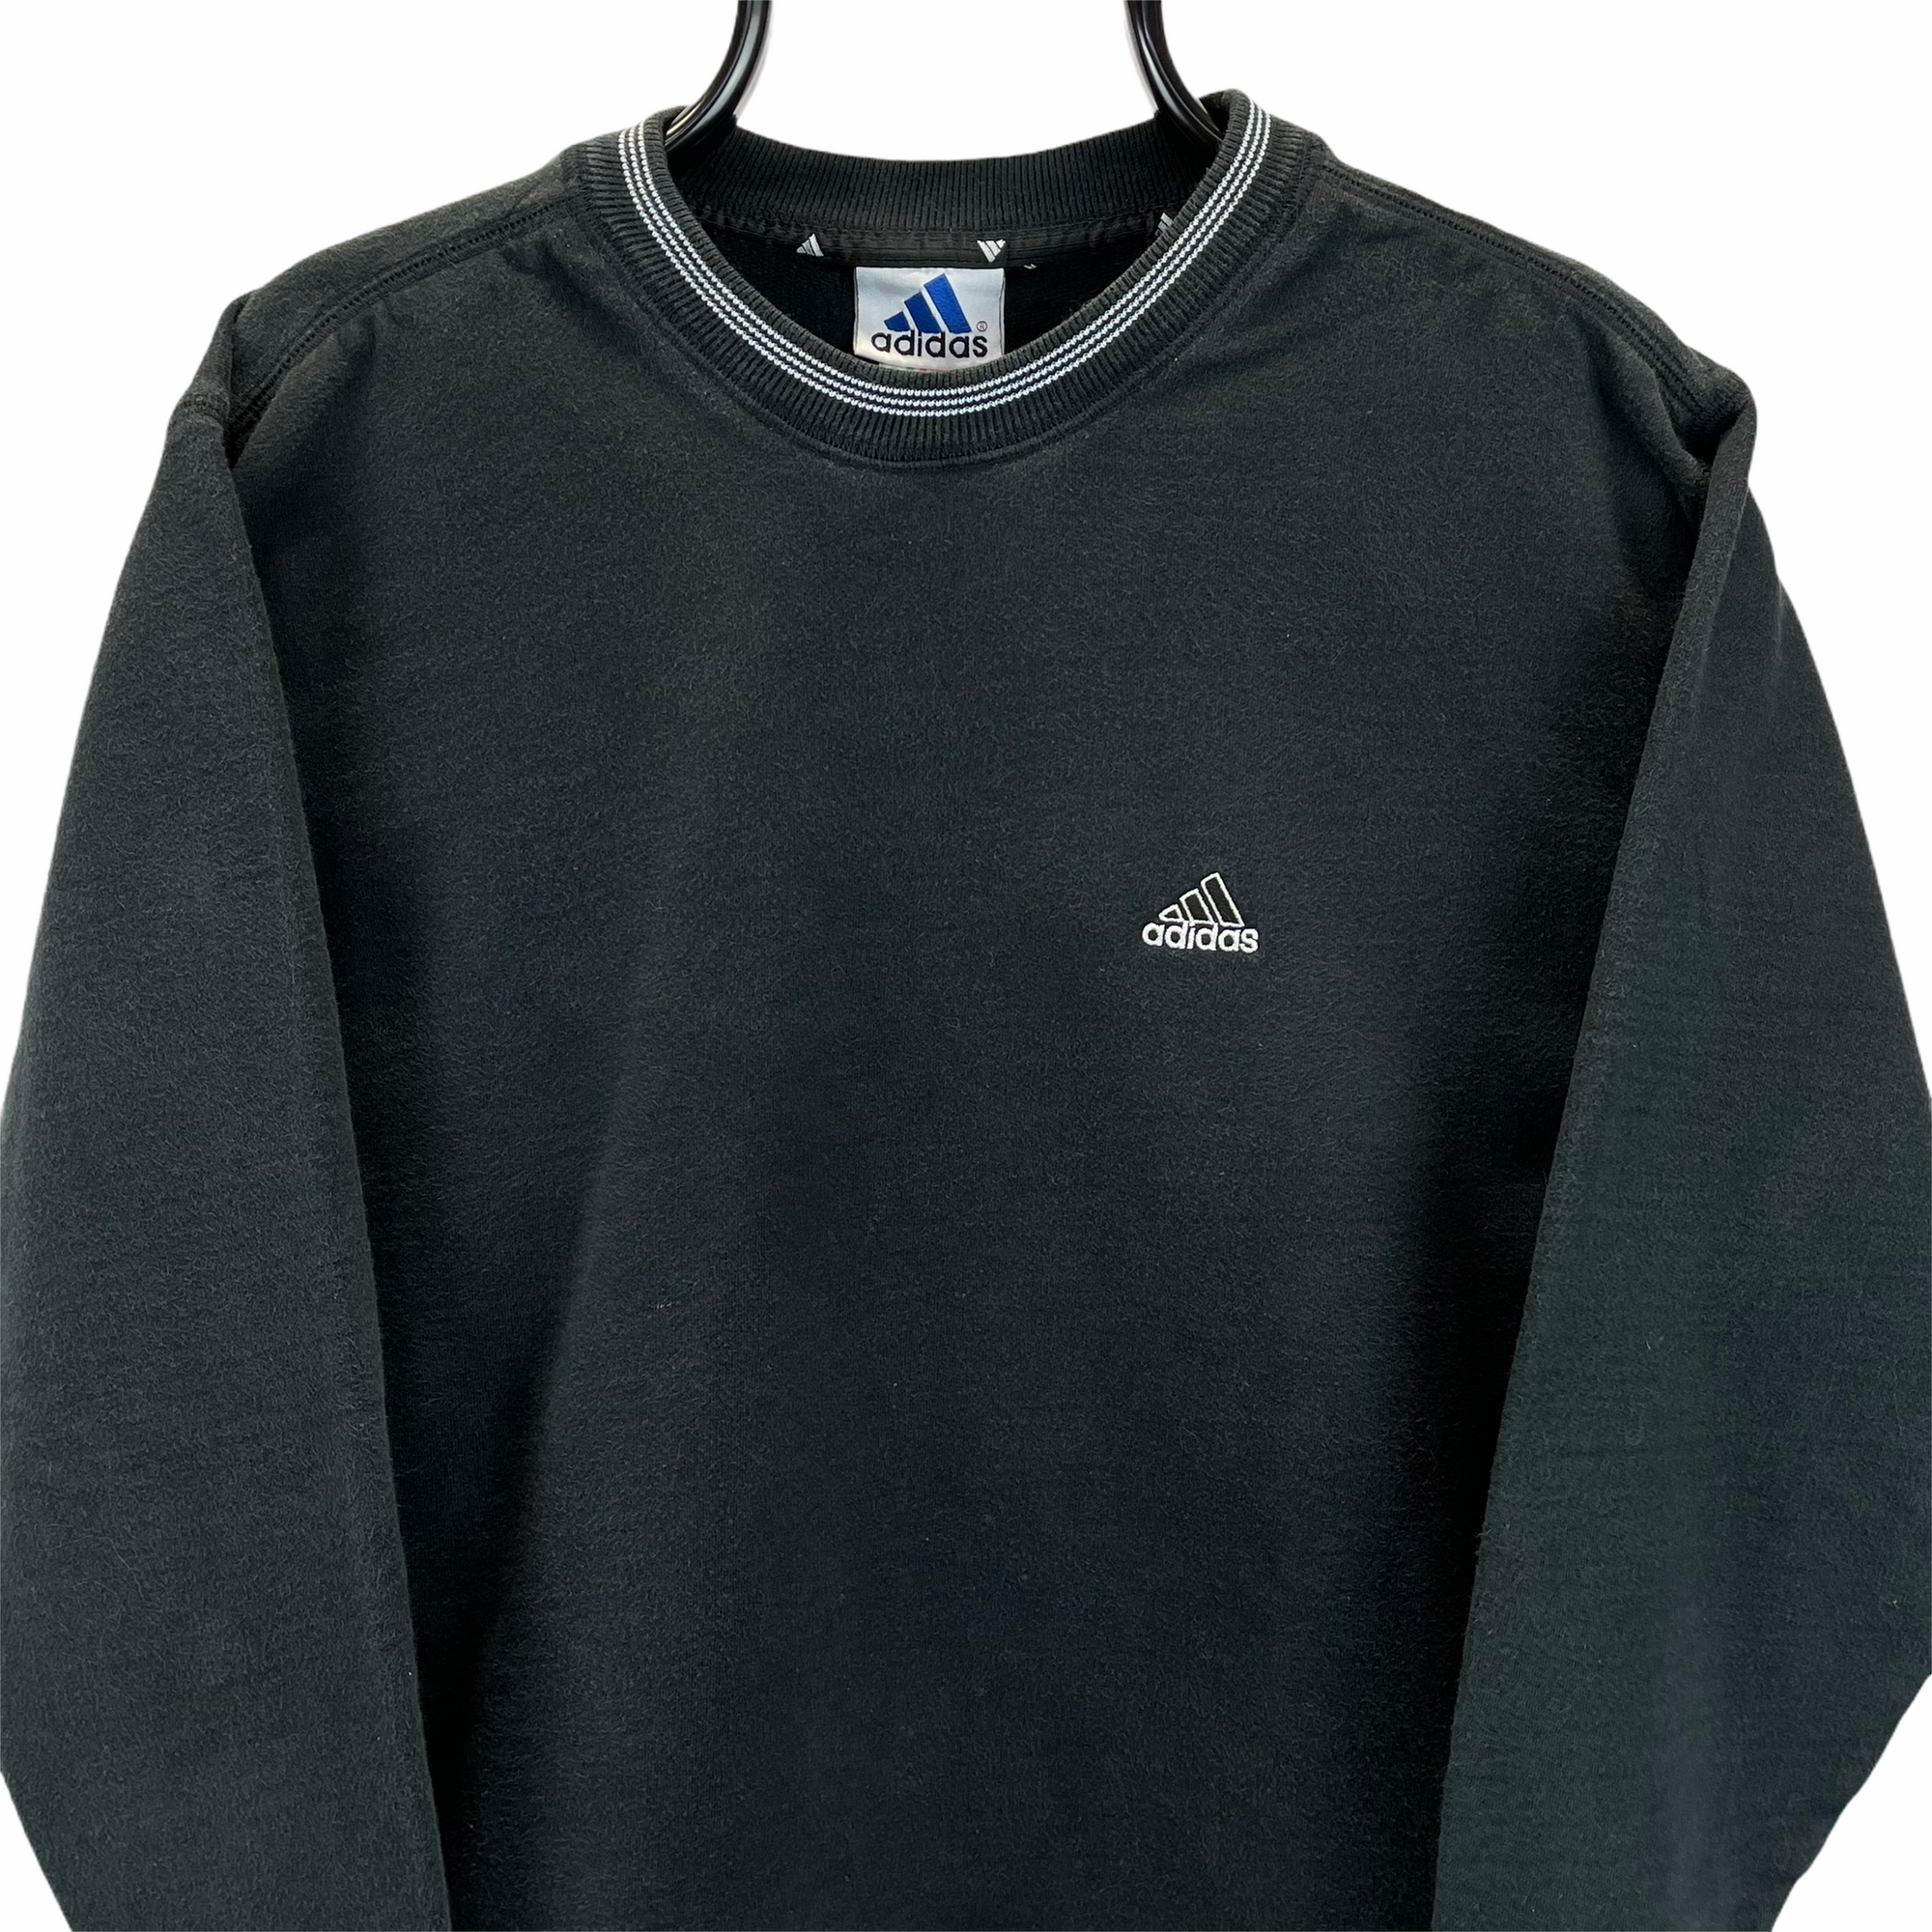 Vintage 90s Adidas Embroidered Small Logo Sweatshirt in Black - Men's Small/Women's Medium